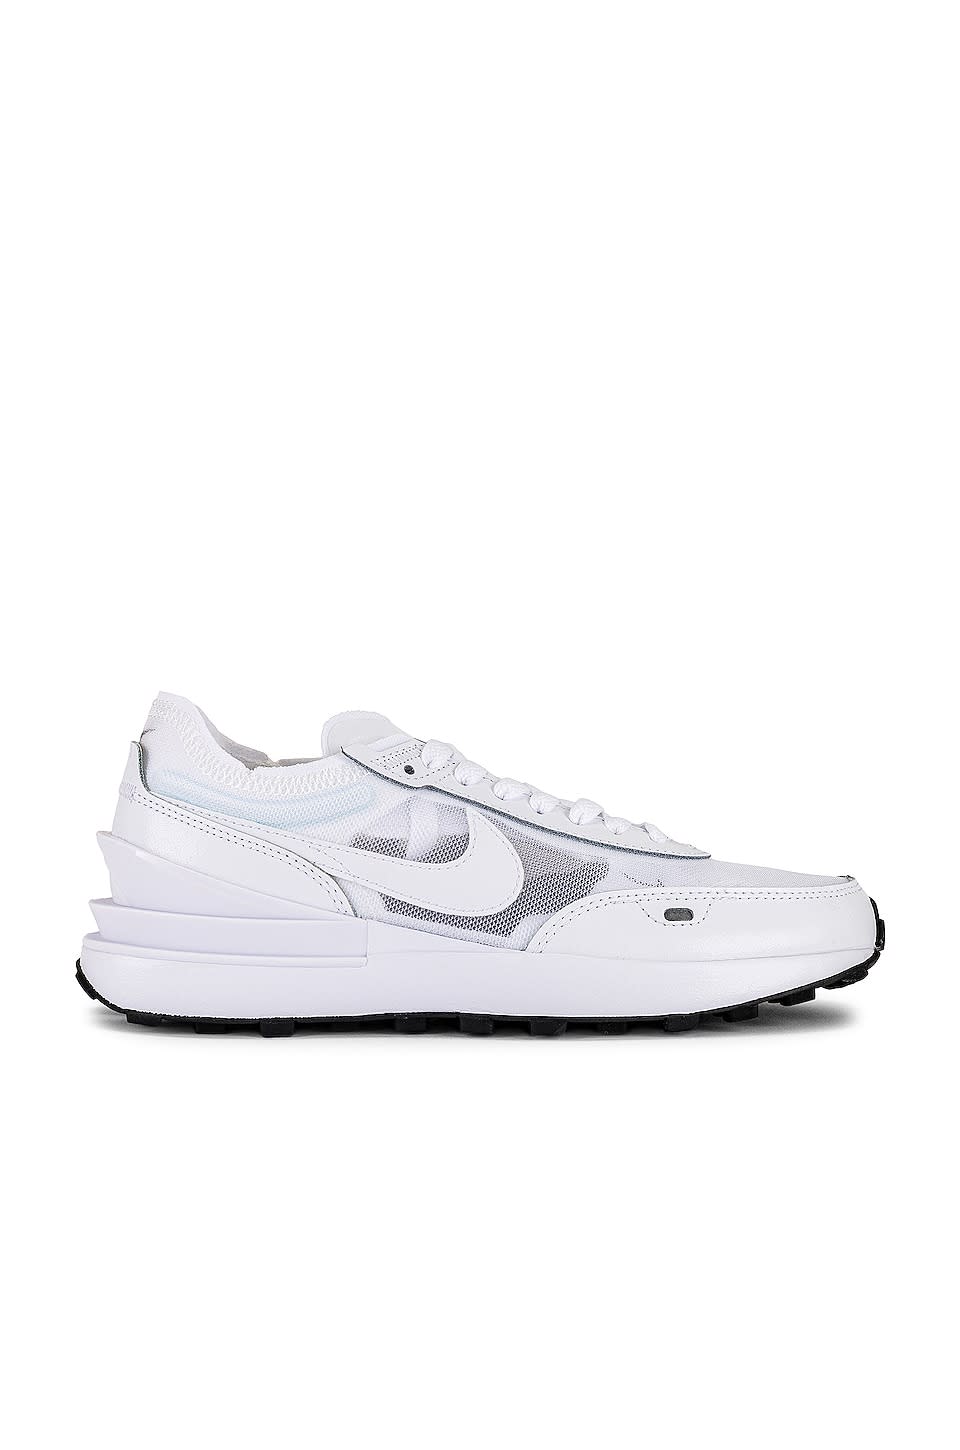 Nike Waffle One Sneaker in White & Black